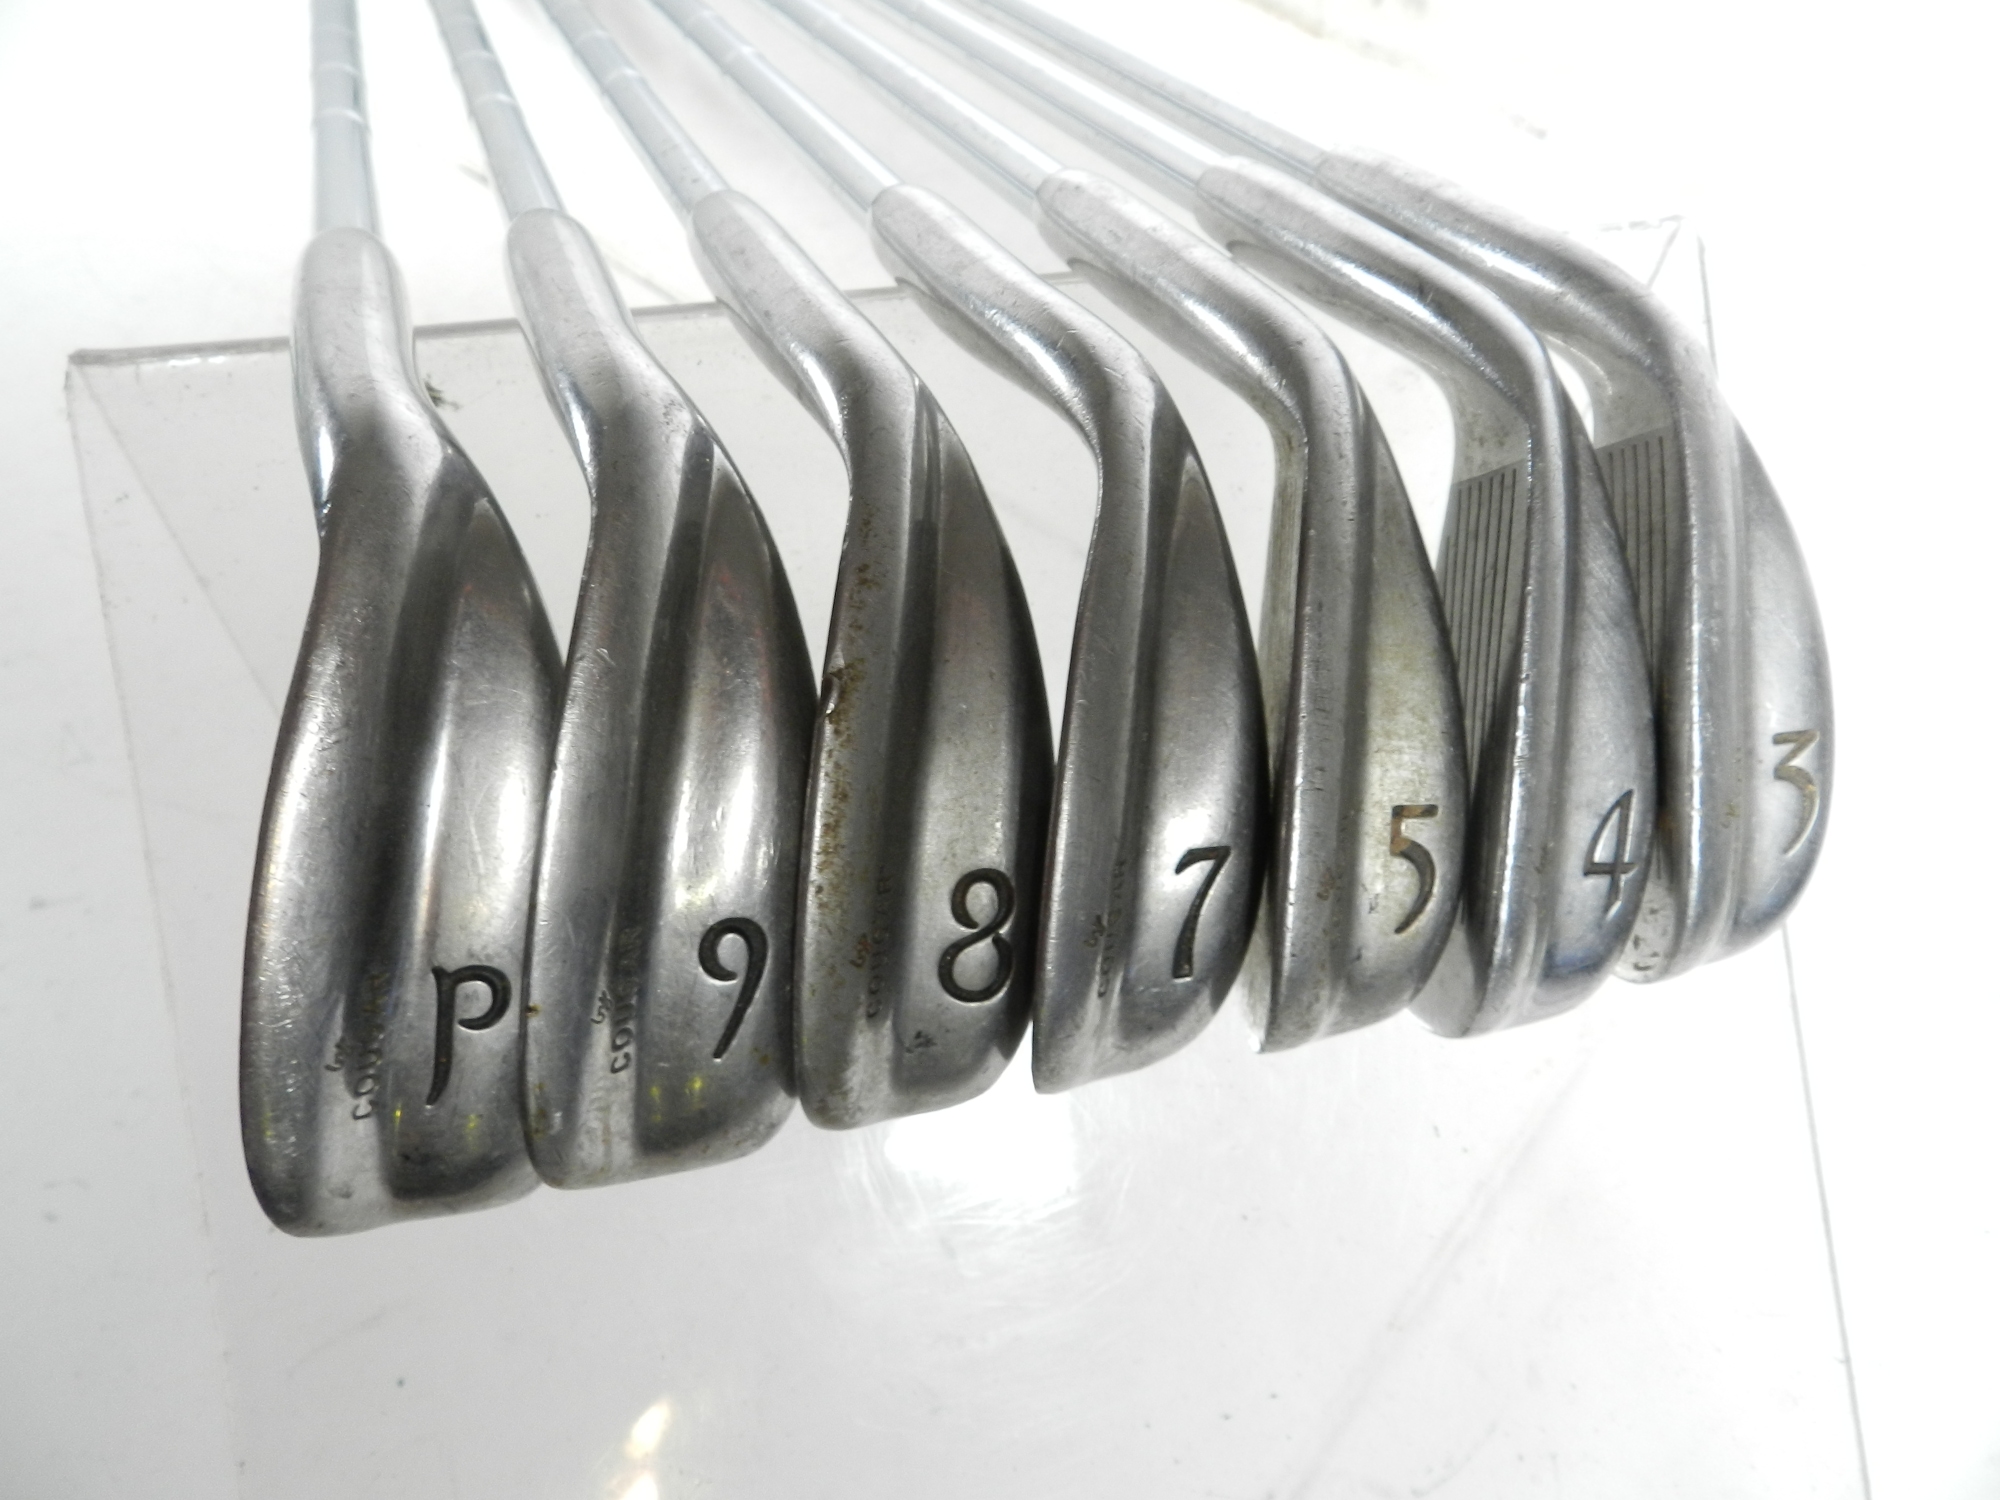 PENNYLIGHT Golf Club Iron Set Includes P, 9, 8, 7, 5, 4, 3, 2  Steel Shafts, RH